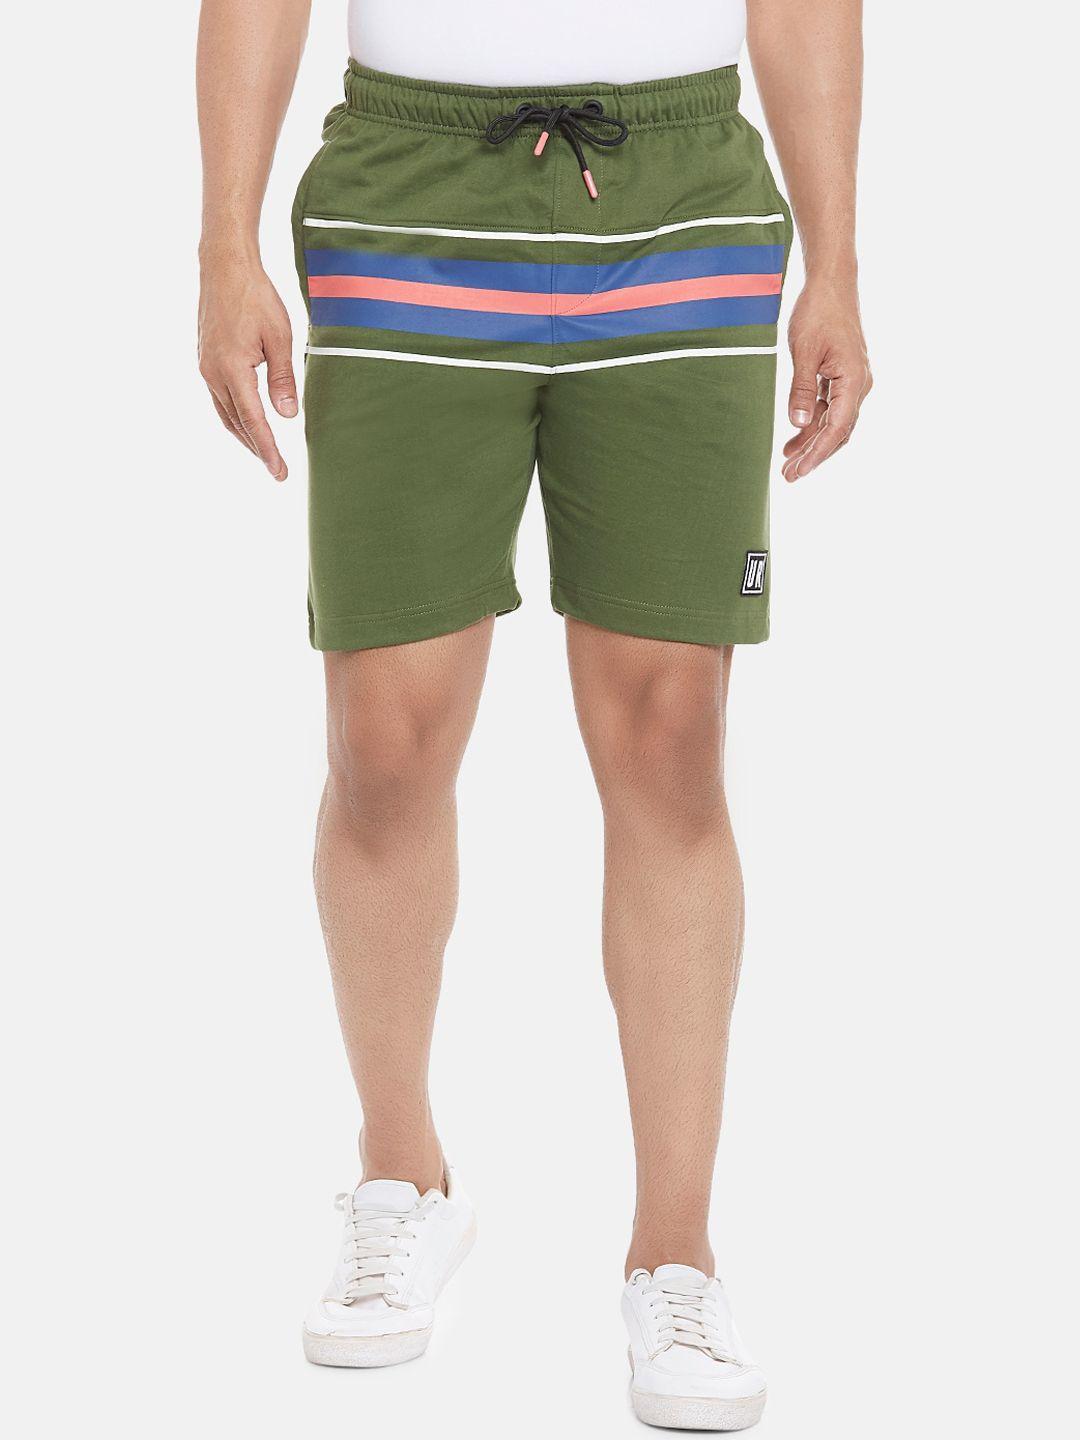 Urban Ranger by pantaloons Men Olive Green Striped Slim Fit Mid-Rise Regular Shorts